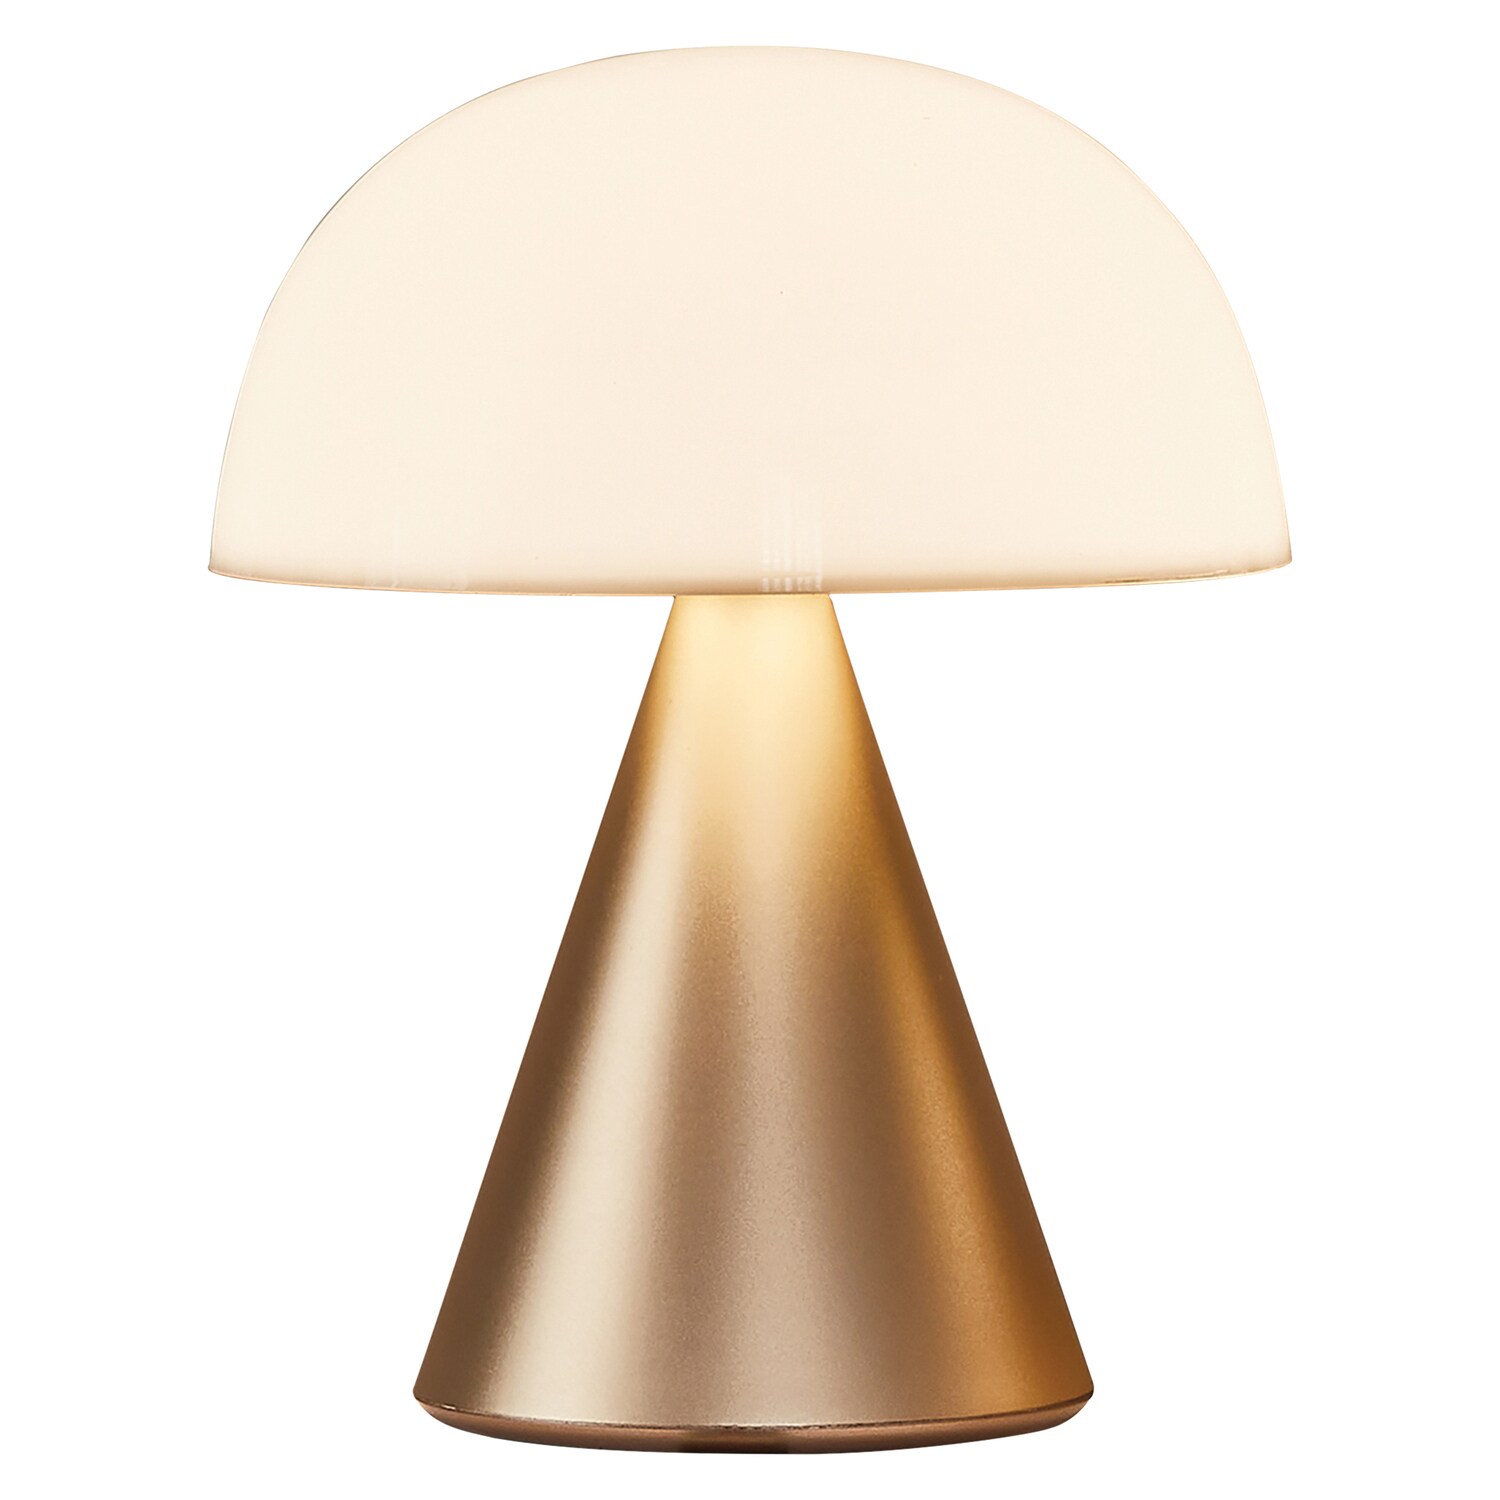 Miniature Lampshade  Mold Form for Sconces Etc New Ceiling Fans Desk Lamps 